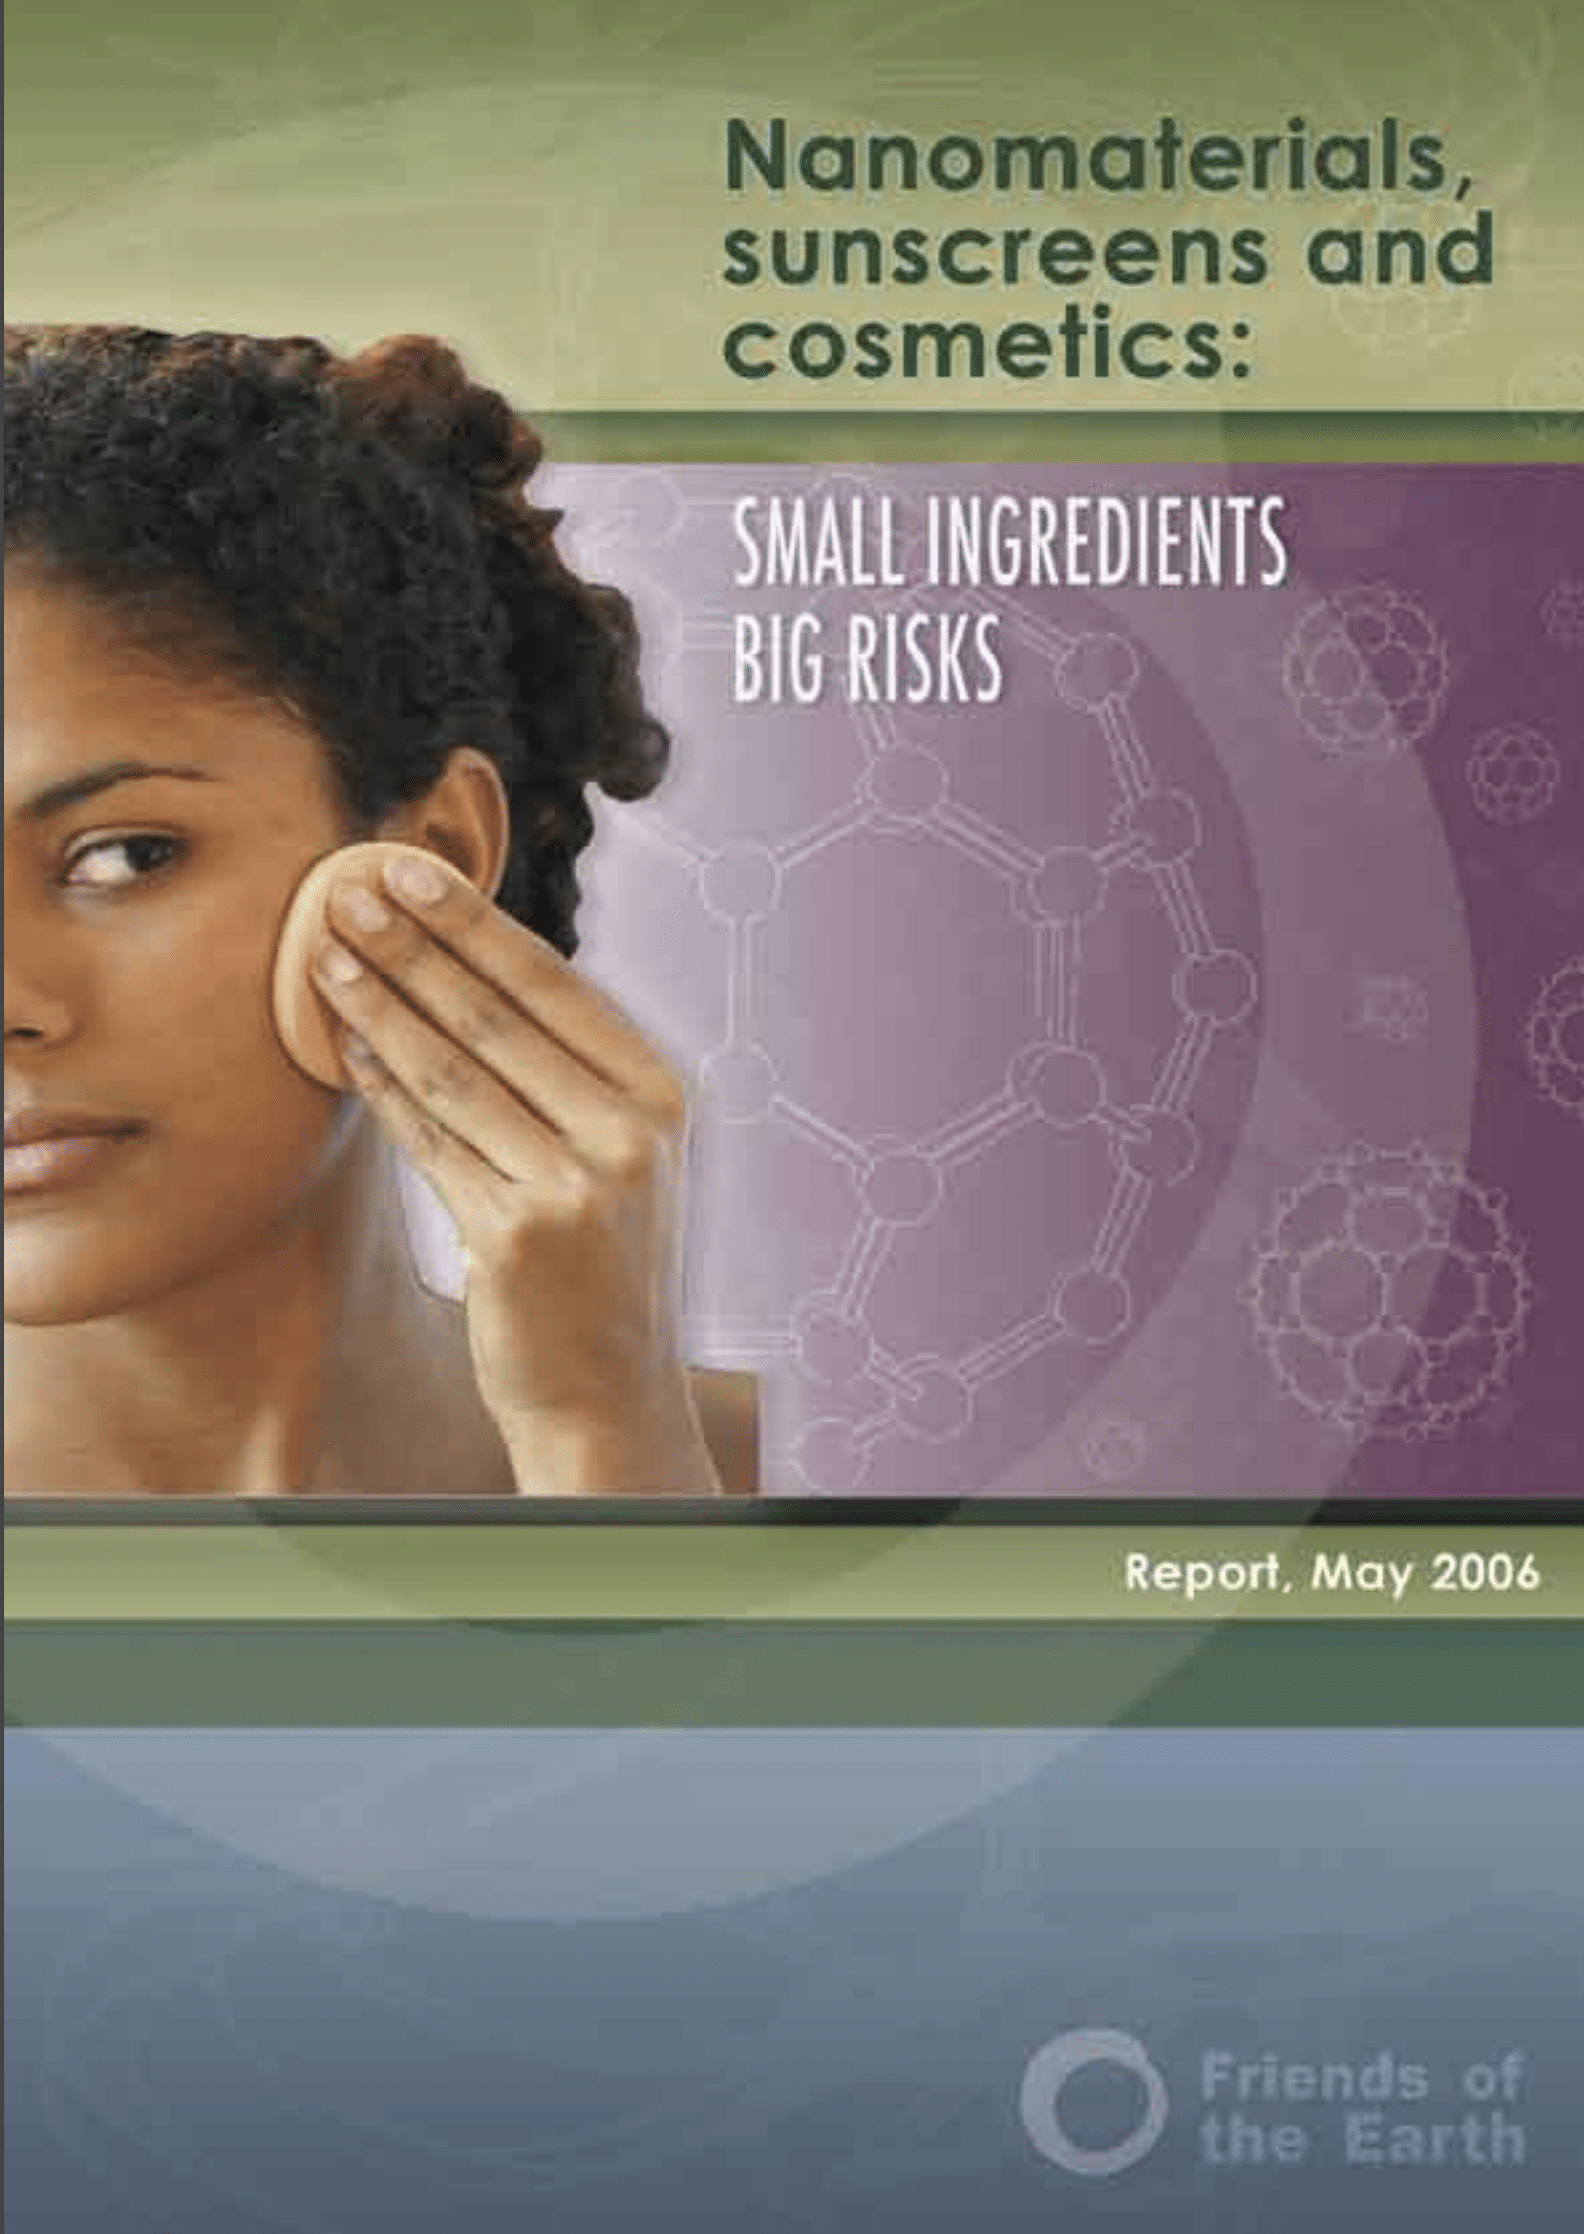 Nanomaterials, sunscreens and cosmetics: Small ingredients, big risks